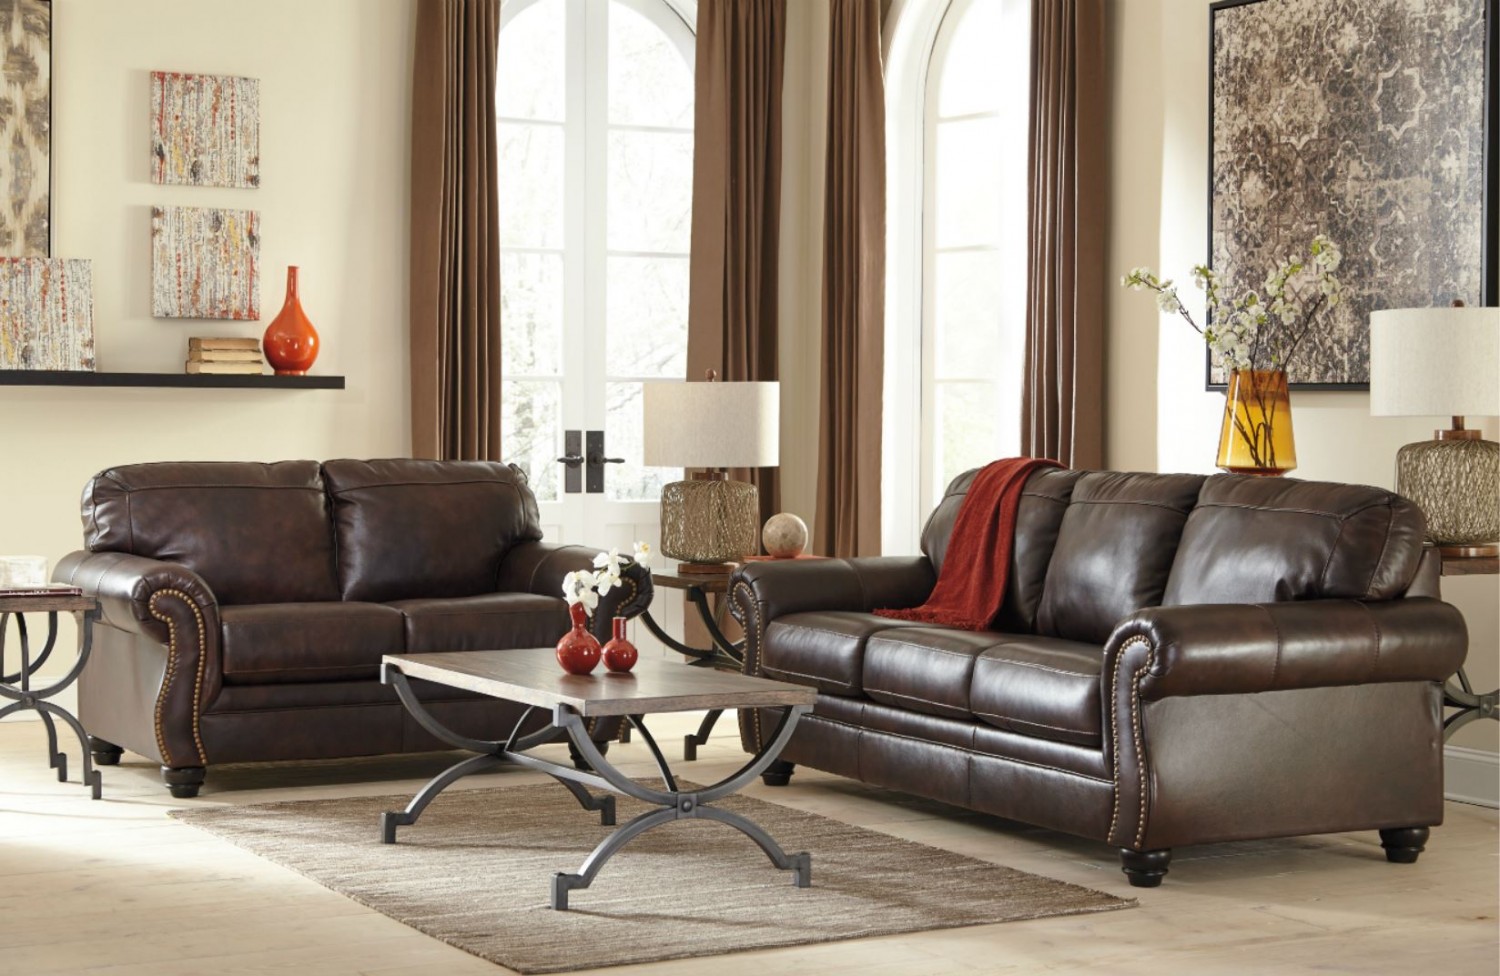 Style File: San Francisco Rustic Furniture Creates Reclaimed Retreat